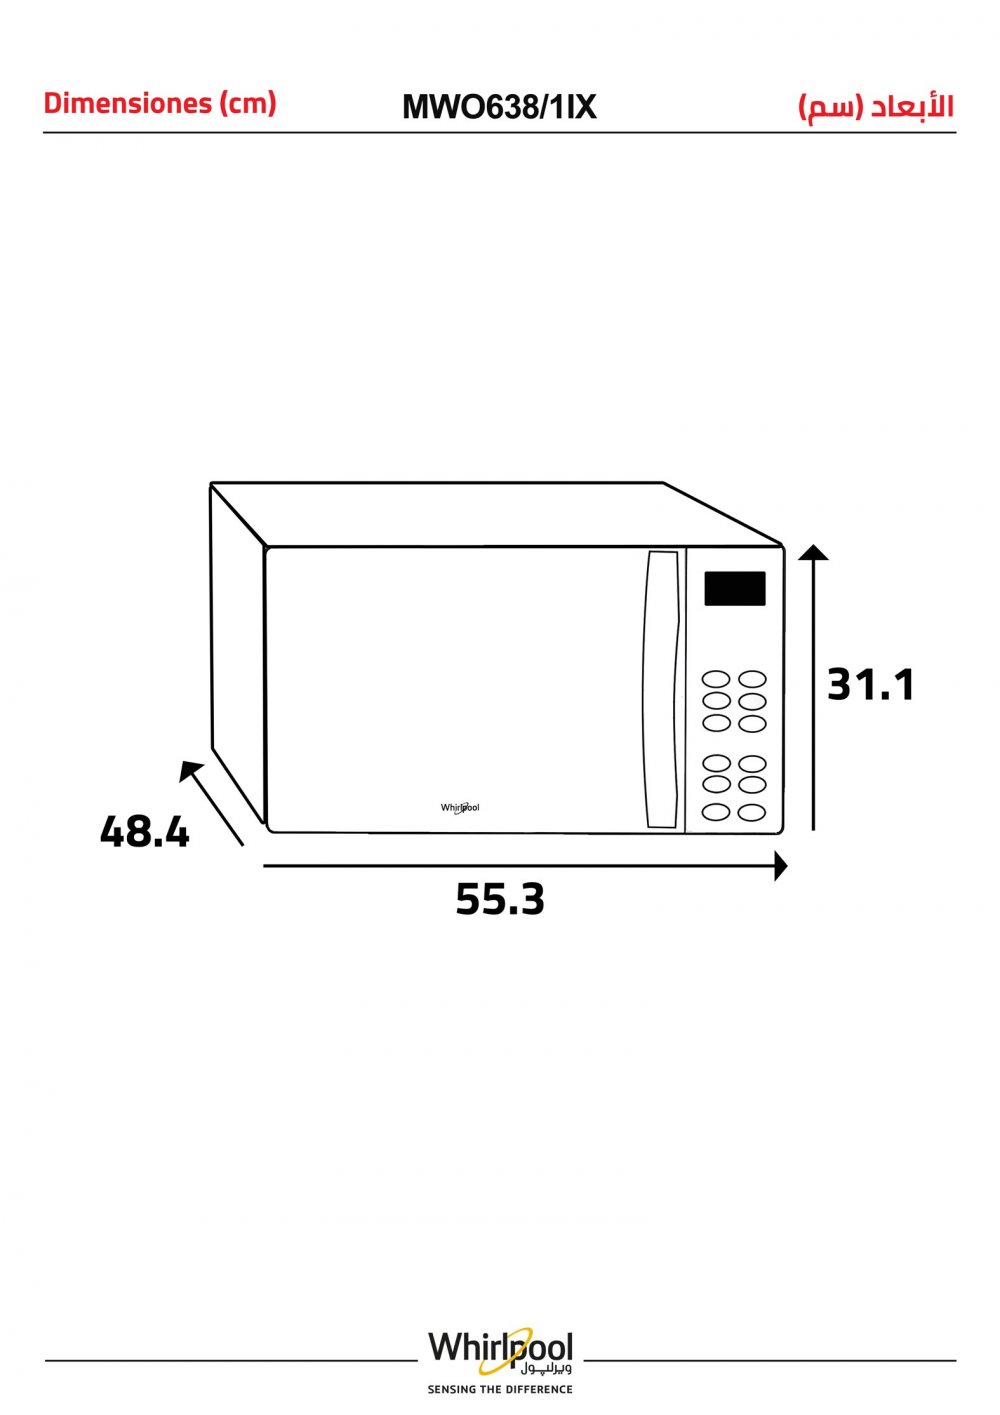 Microwave 38L-St